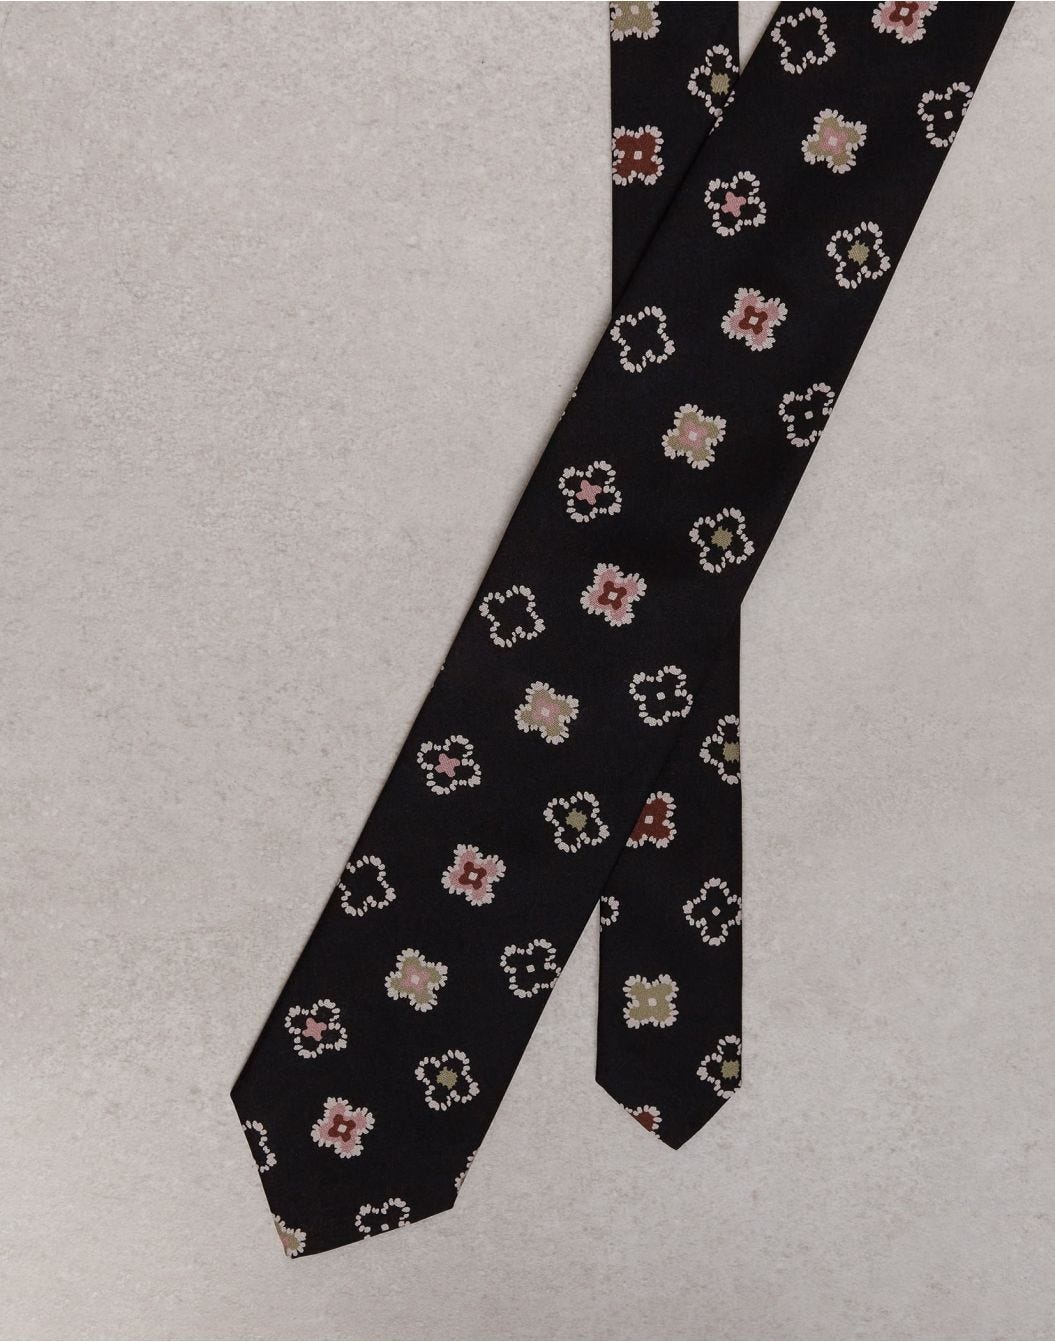 Cravatta classica foderata in seta haboutay